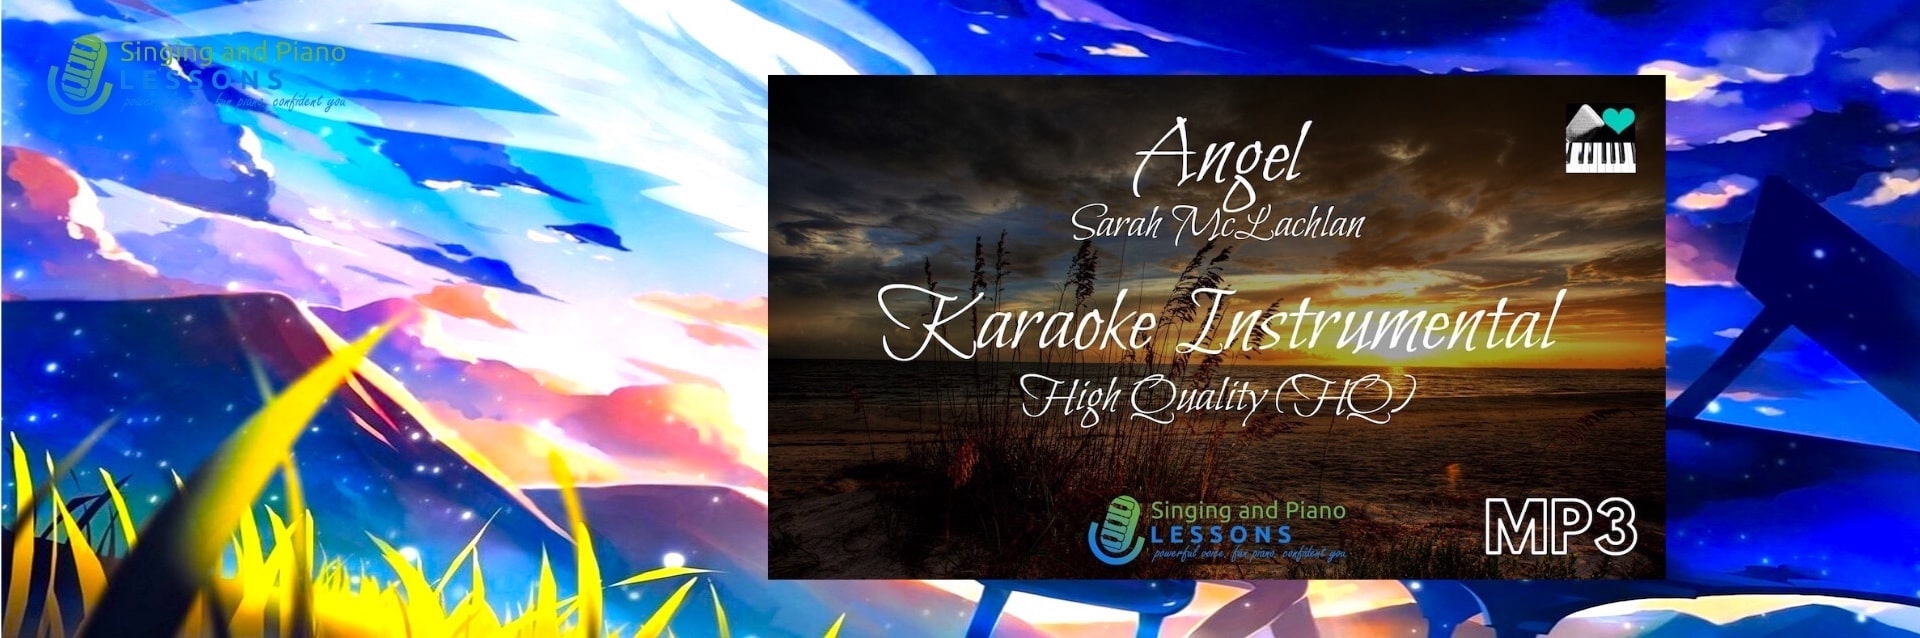 Angel Sarah McLachlan Karaoke Instrumental High Quality (HQ)